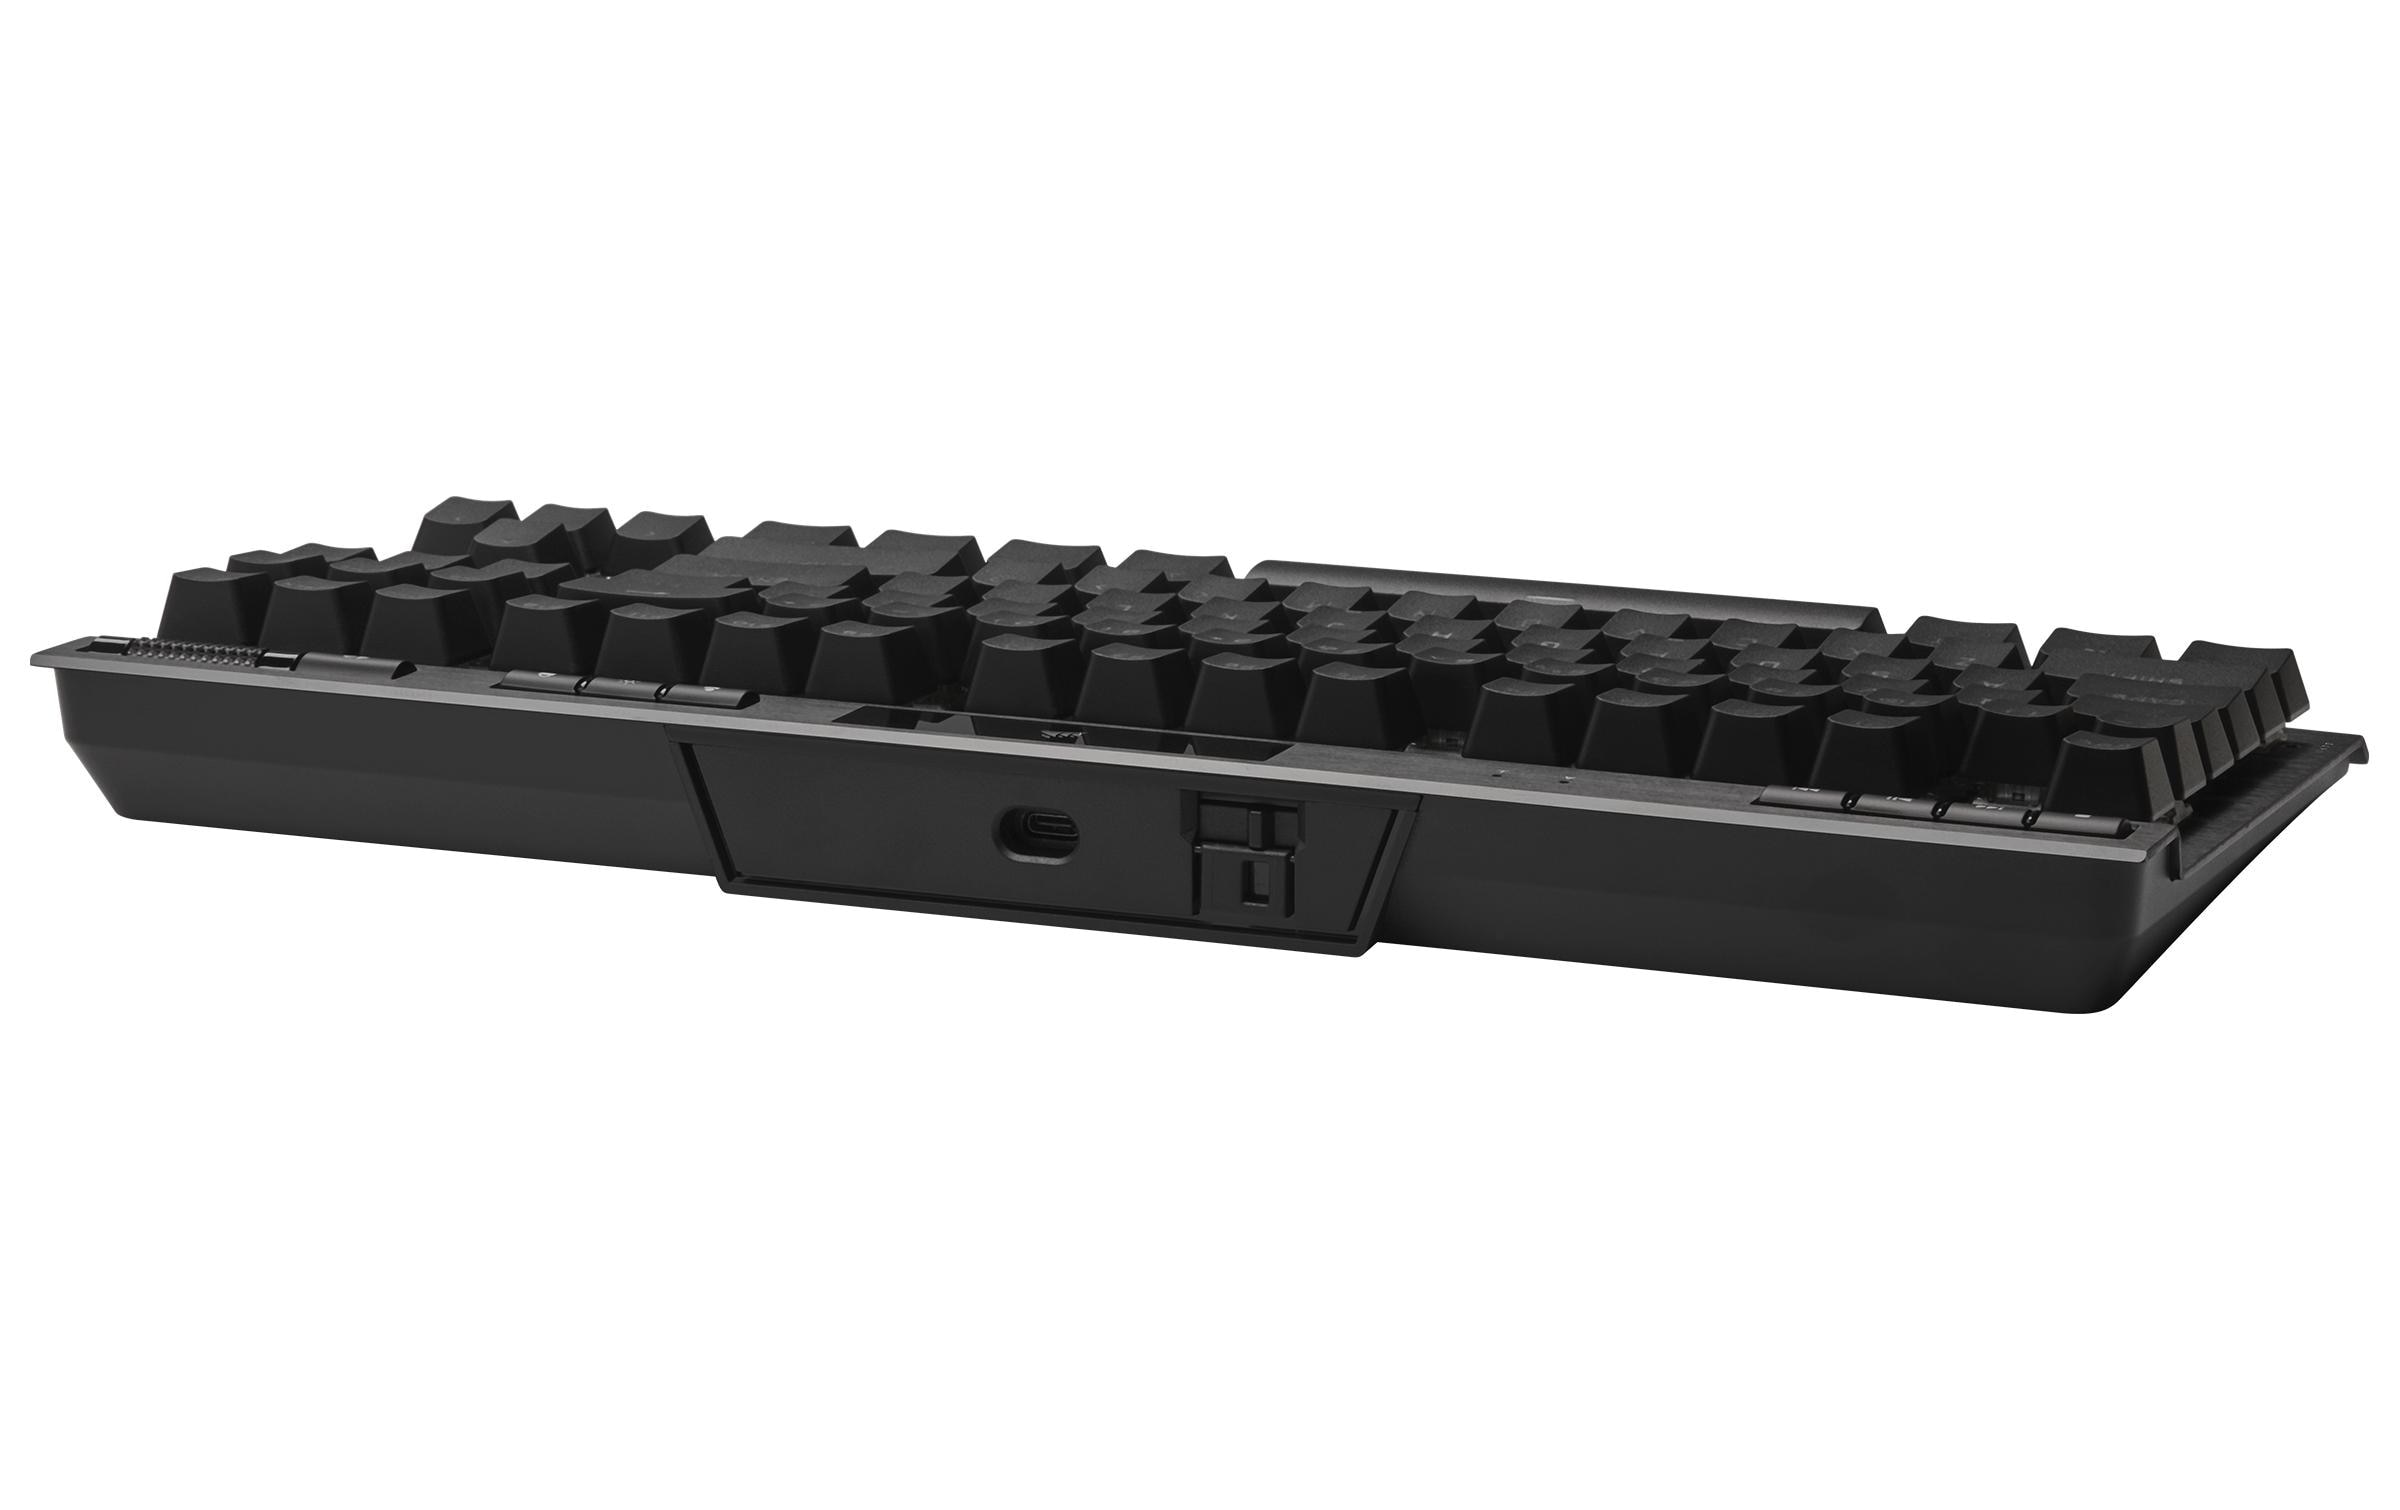 Corsair Gaming-Tastatur »TKL RGB CS MX SPEED«